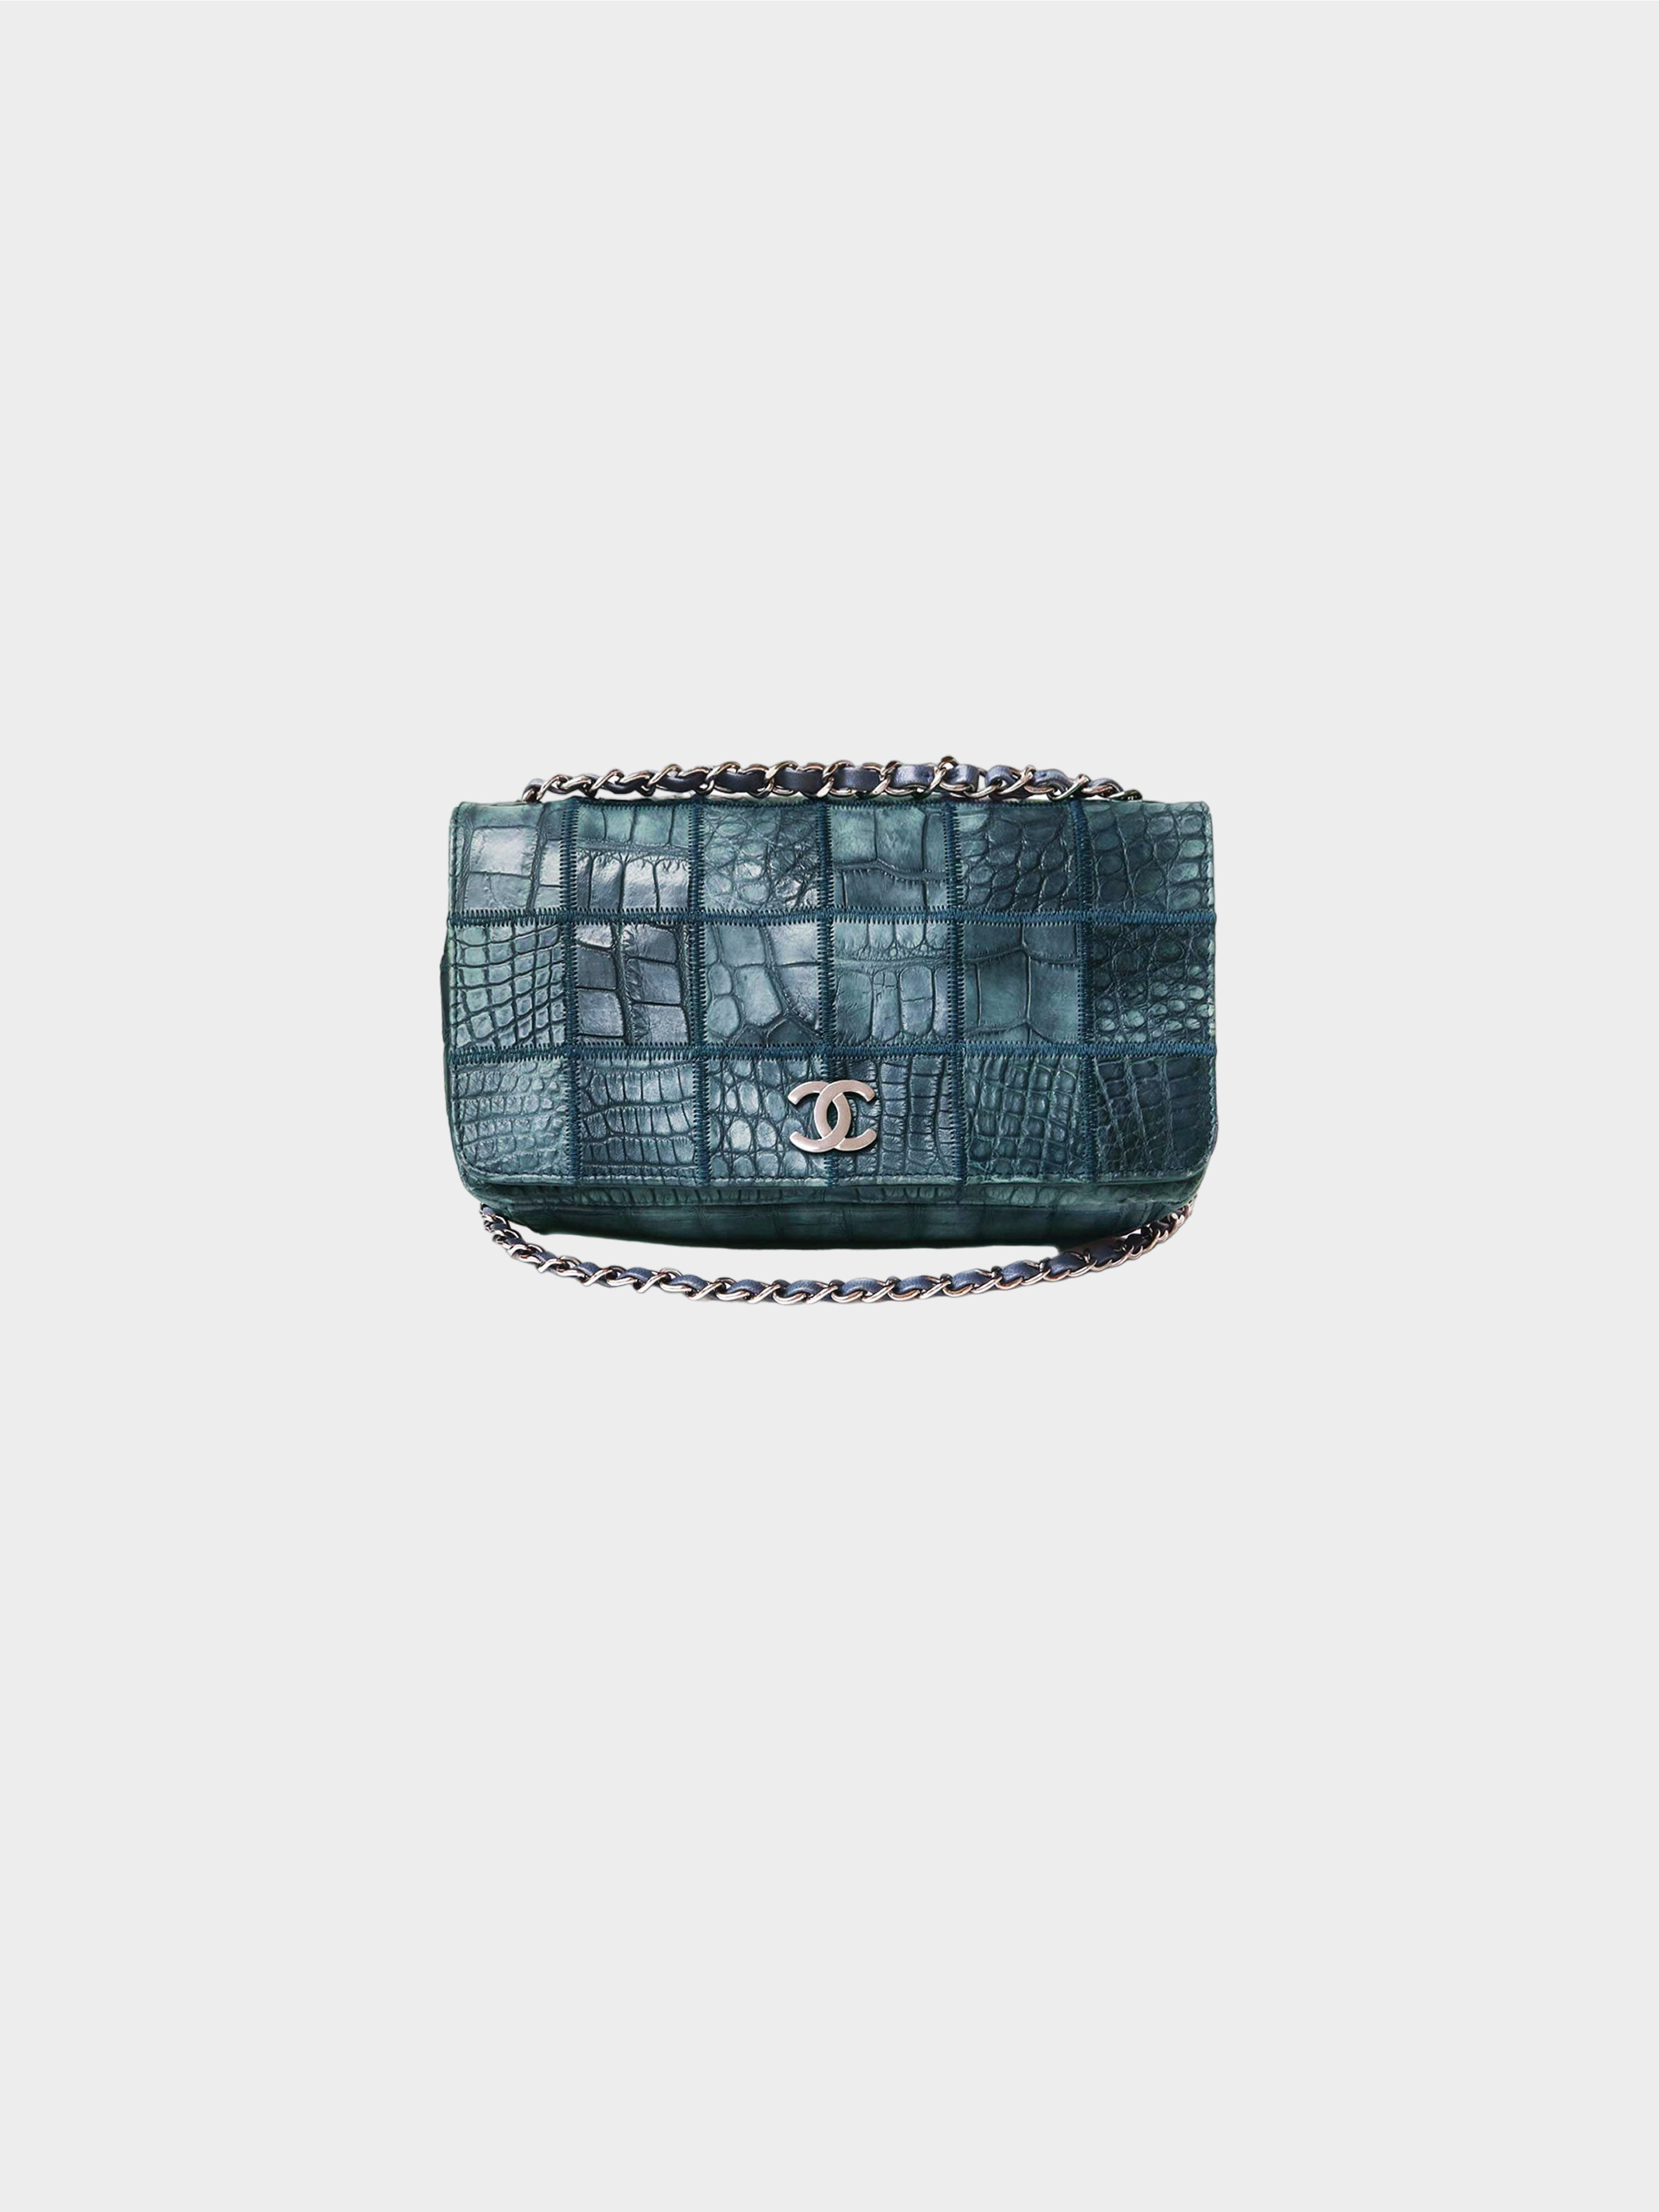 Chanel 2005-2006 Dark Blue Alligator Leather Flap Bag